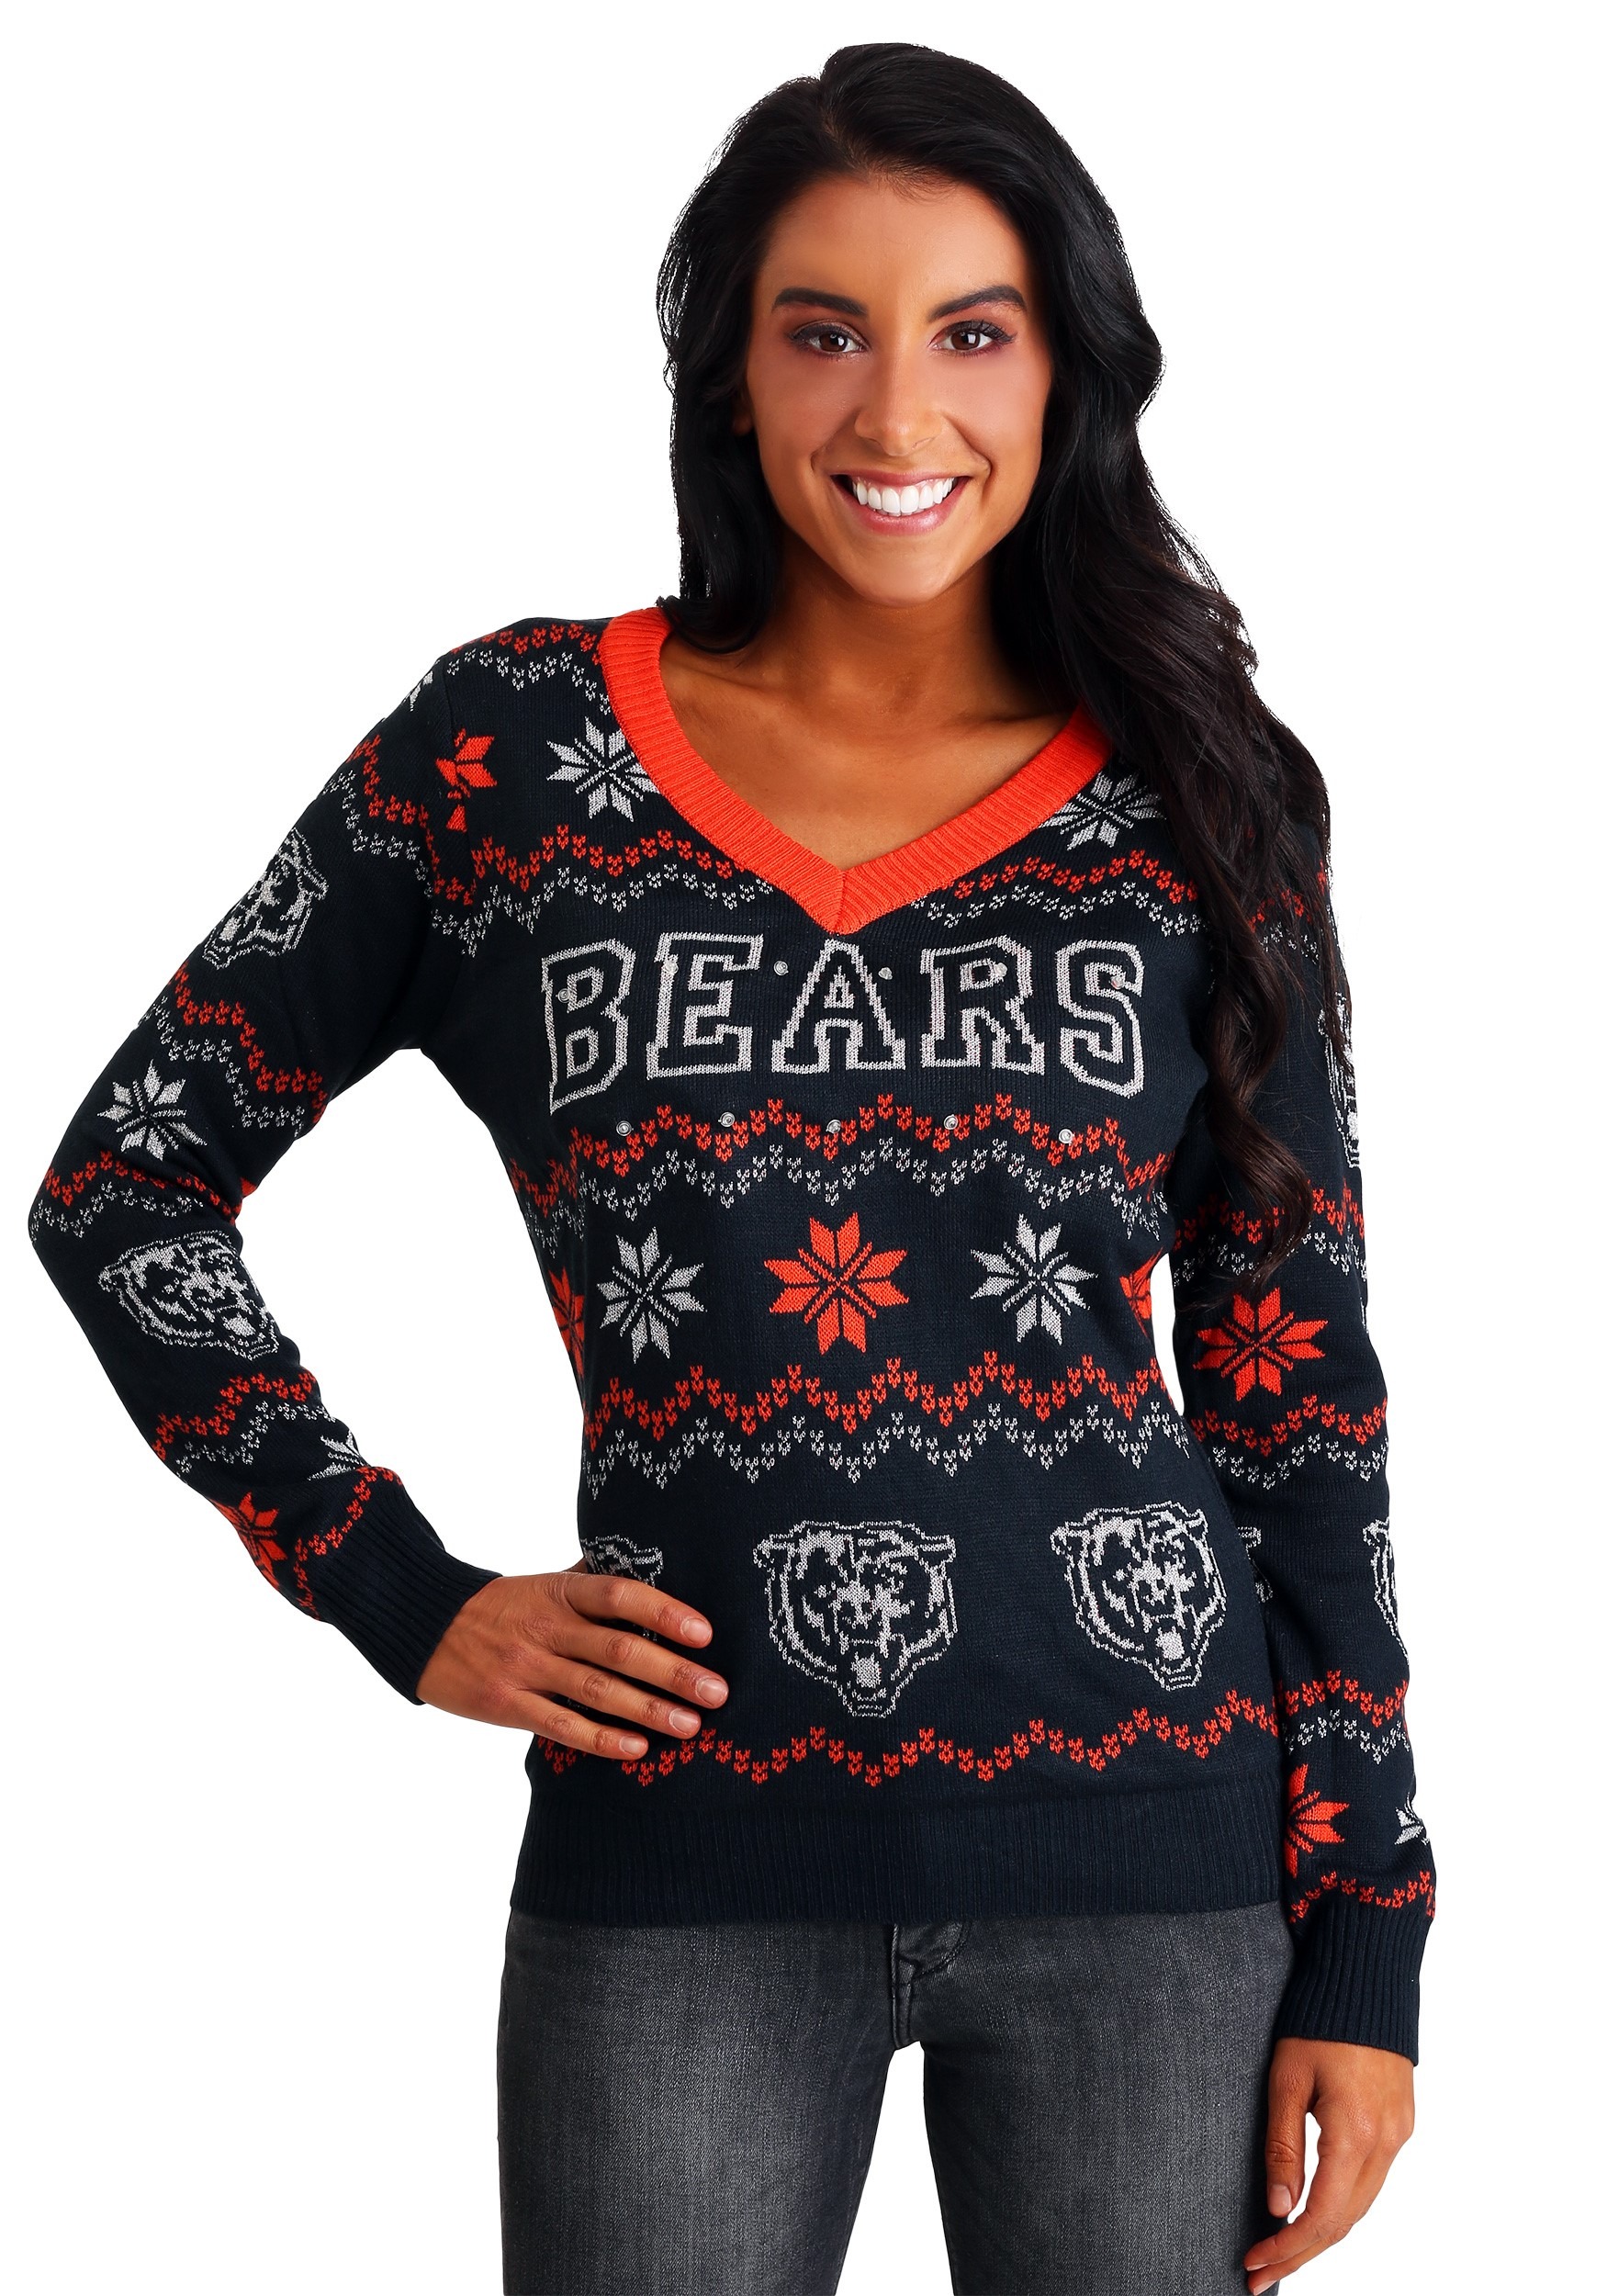 female chicago bears jersey